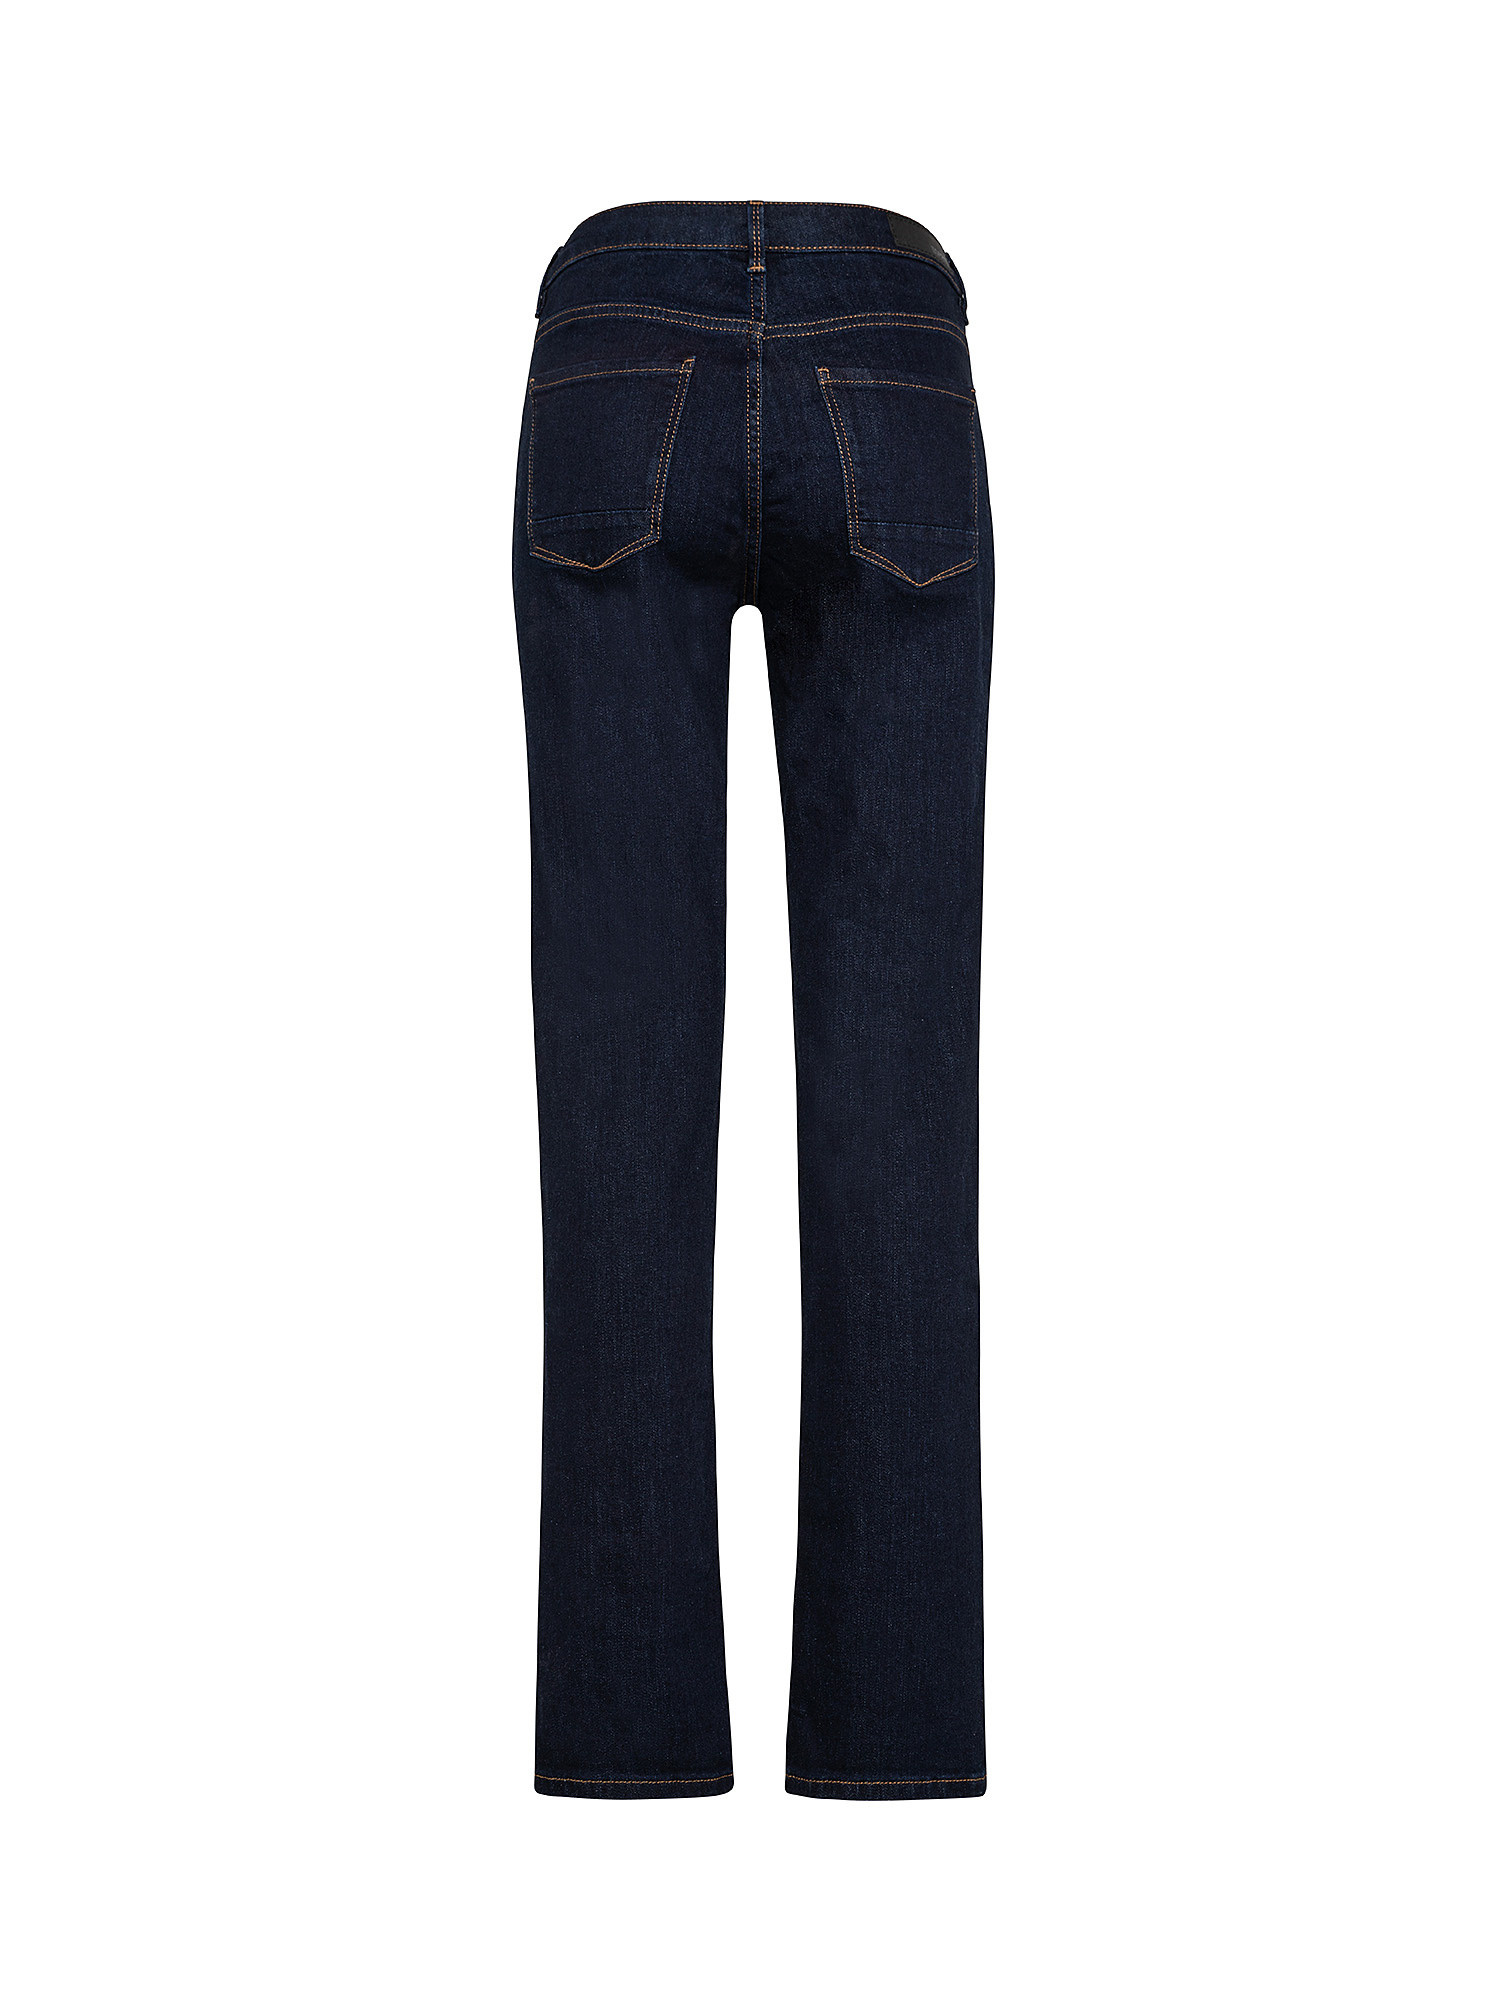 Jeans super stretch con cotone biologico, Denim, large image number 1